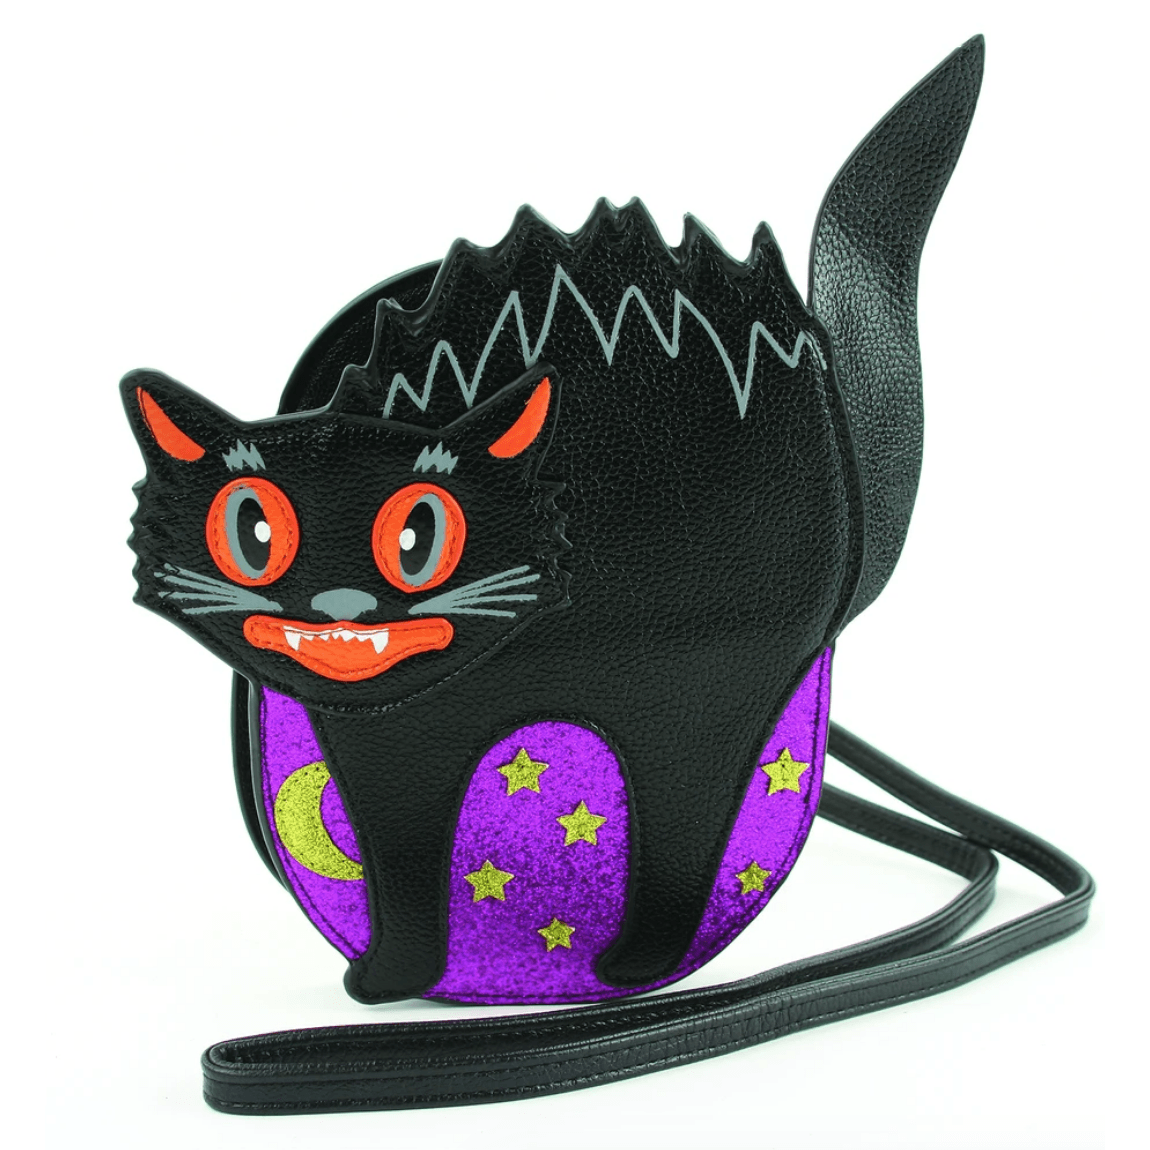 Sleepyville Critters - Scary Black Cat Cross Body Bag